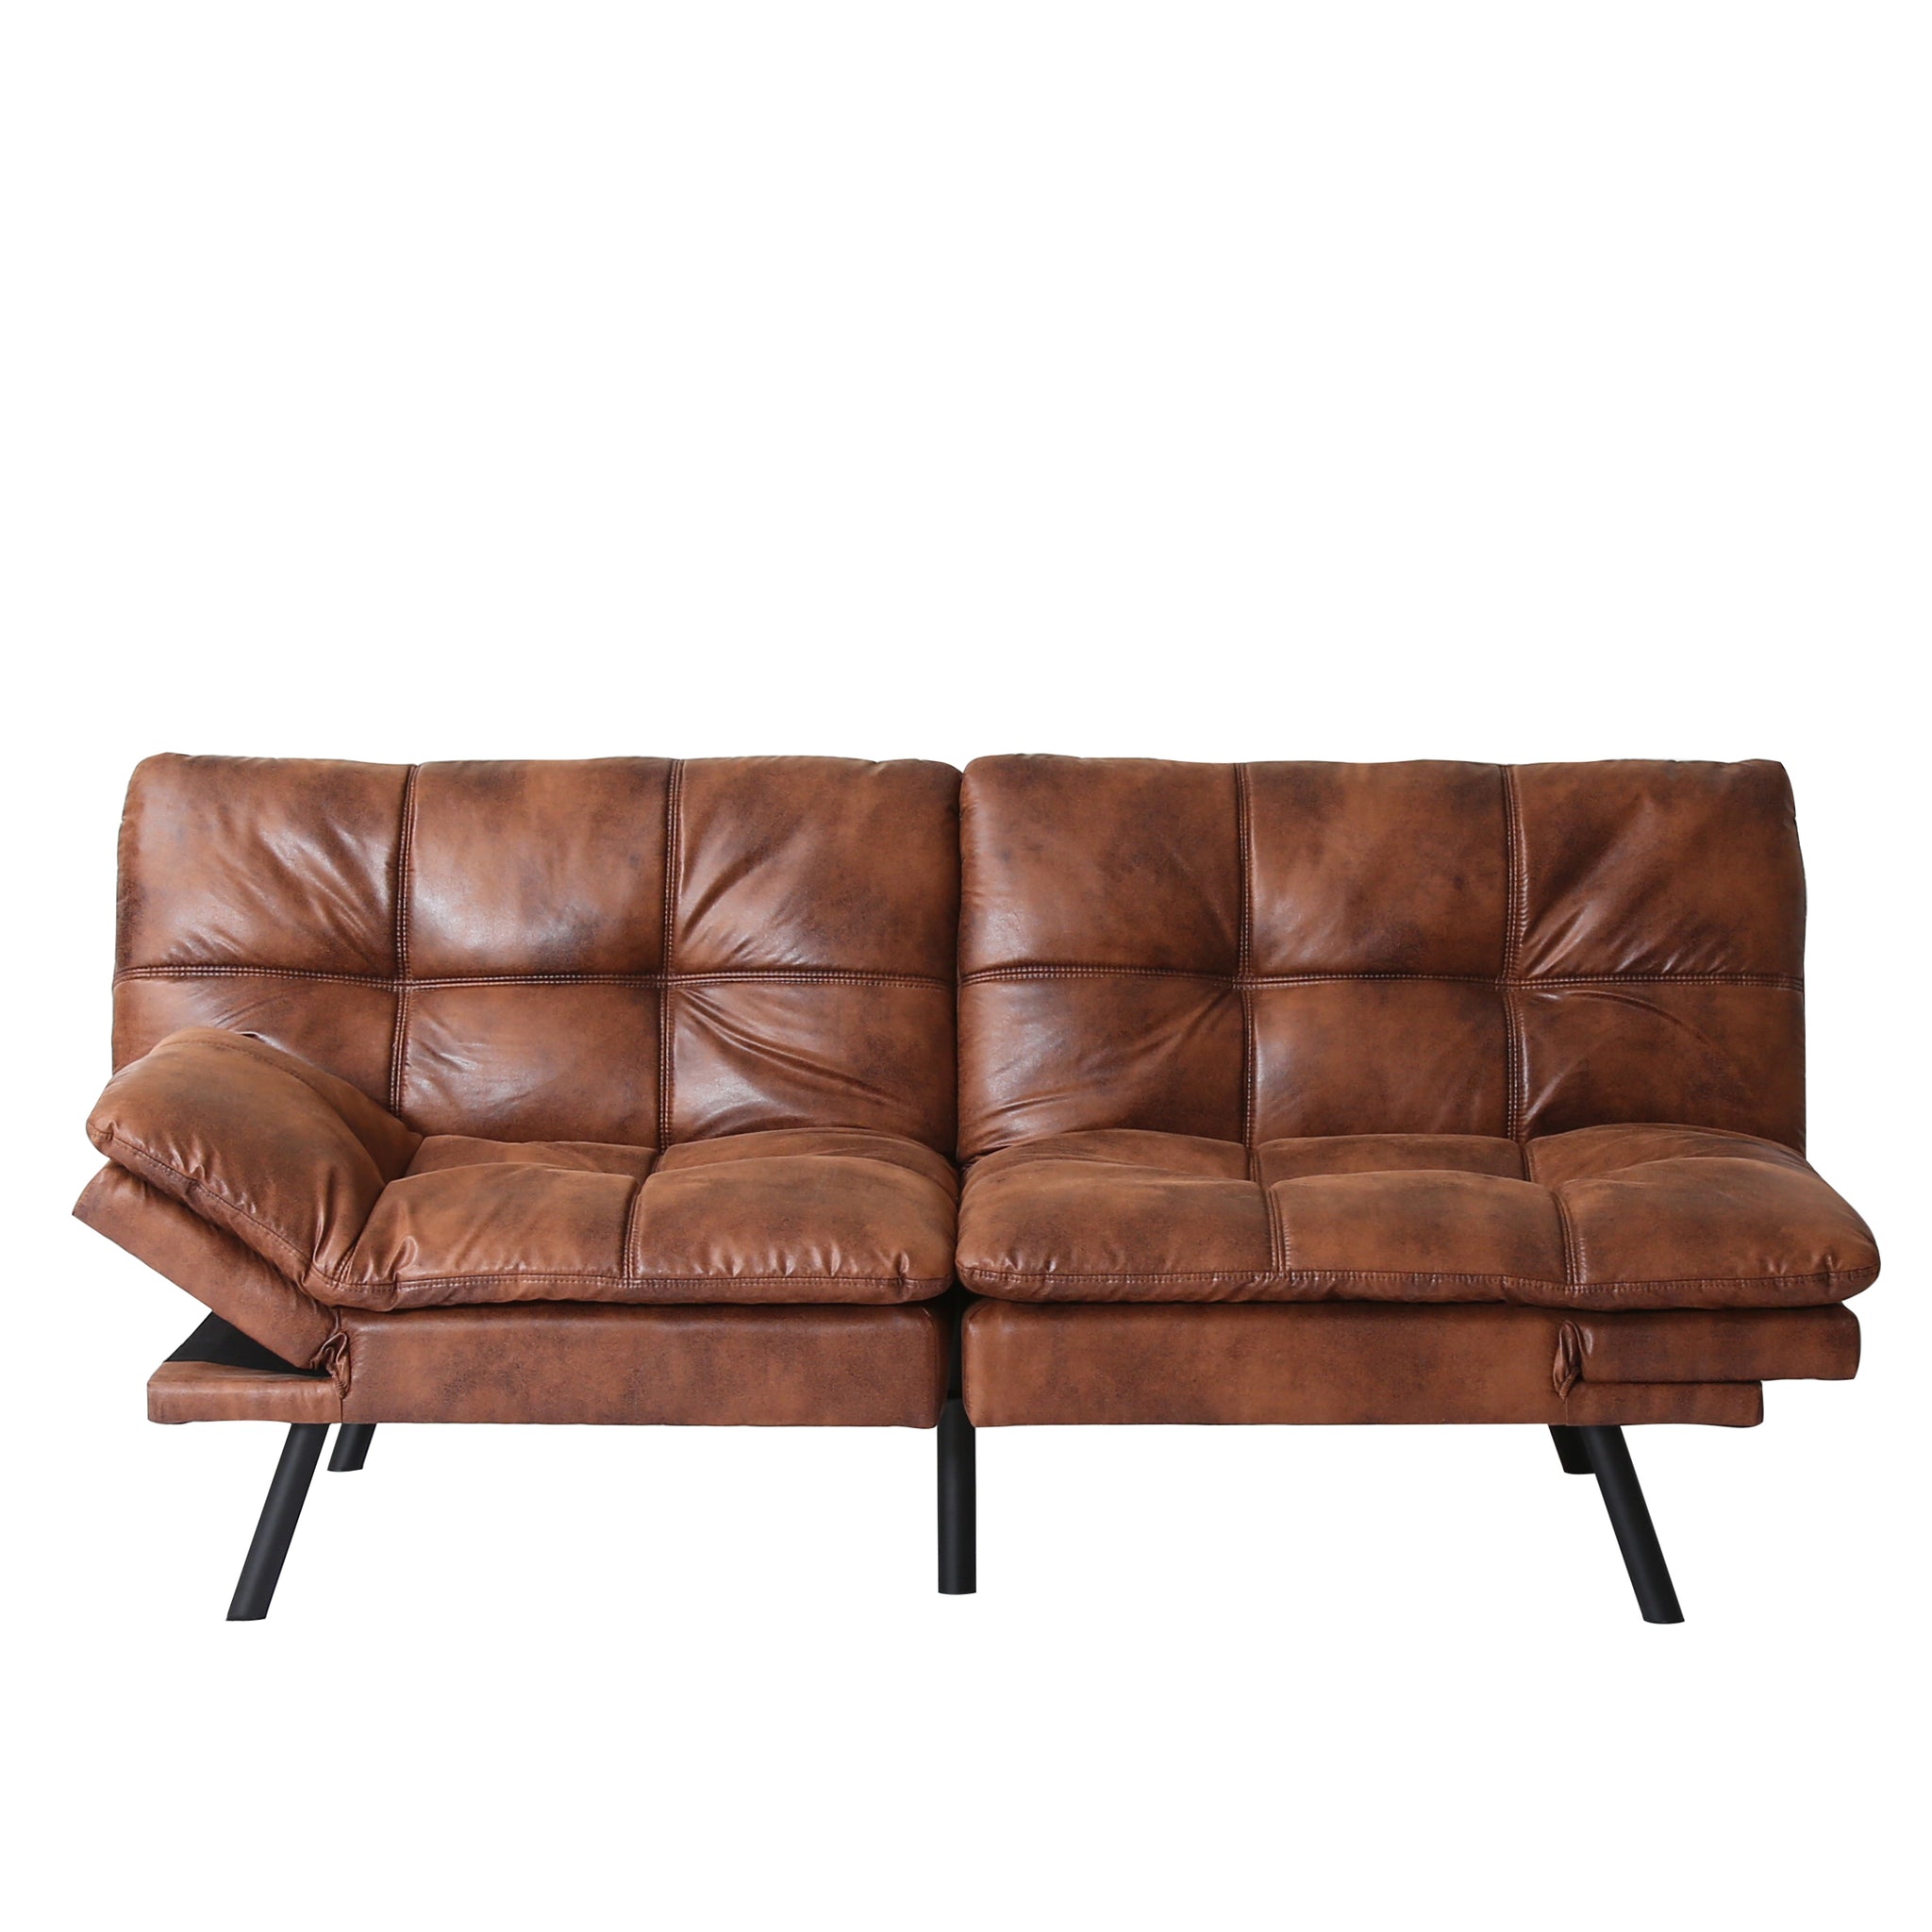 Convertible Memory Foam Futon Couch Bed, Modern brown-pu